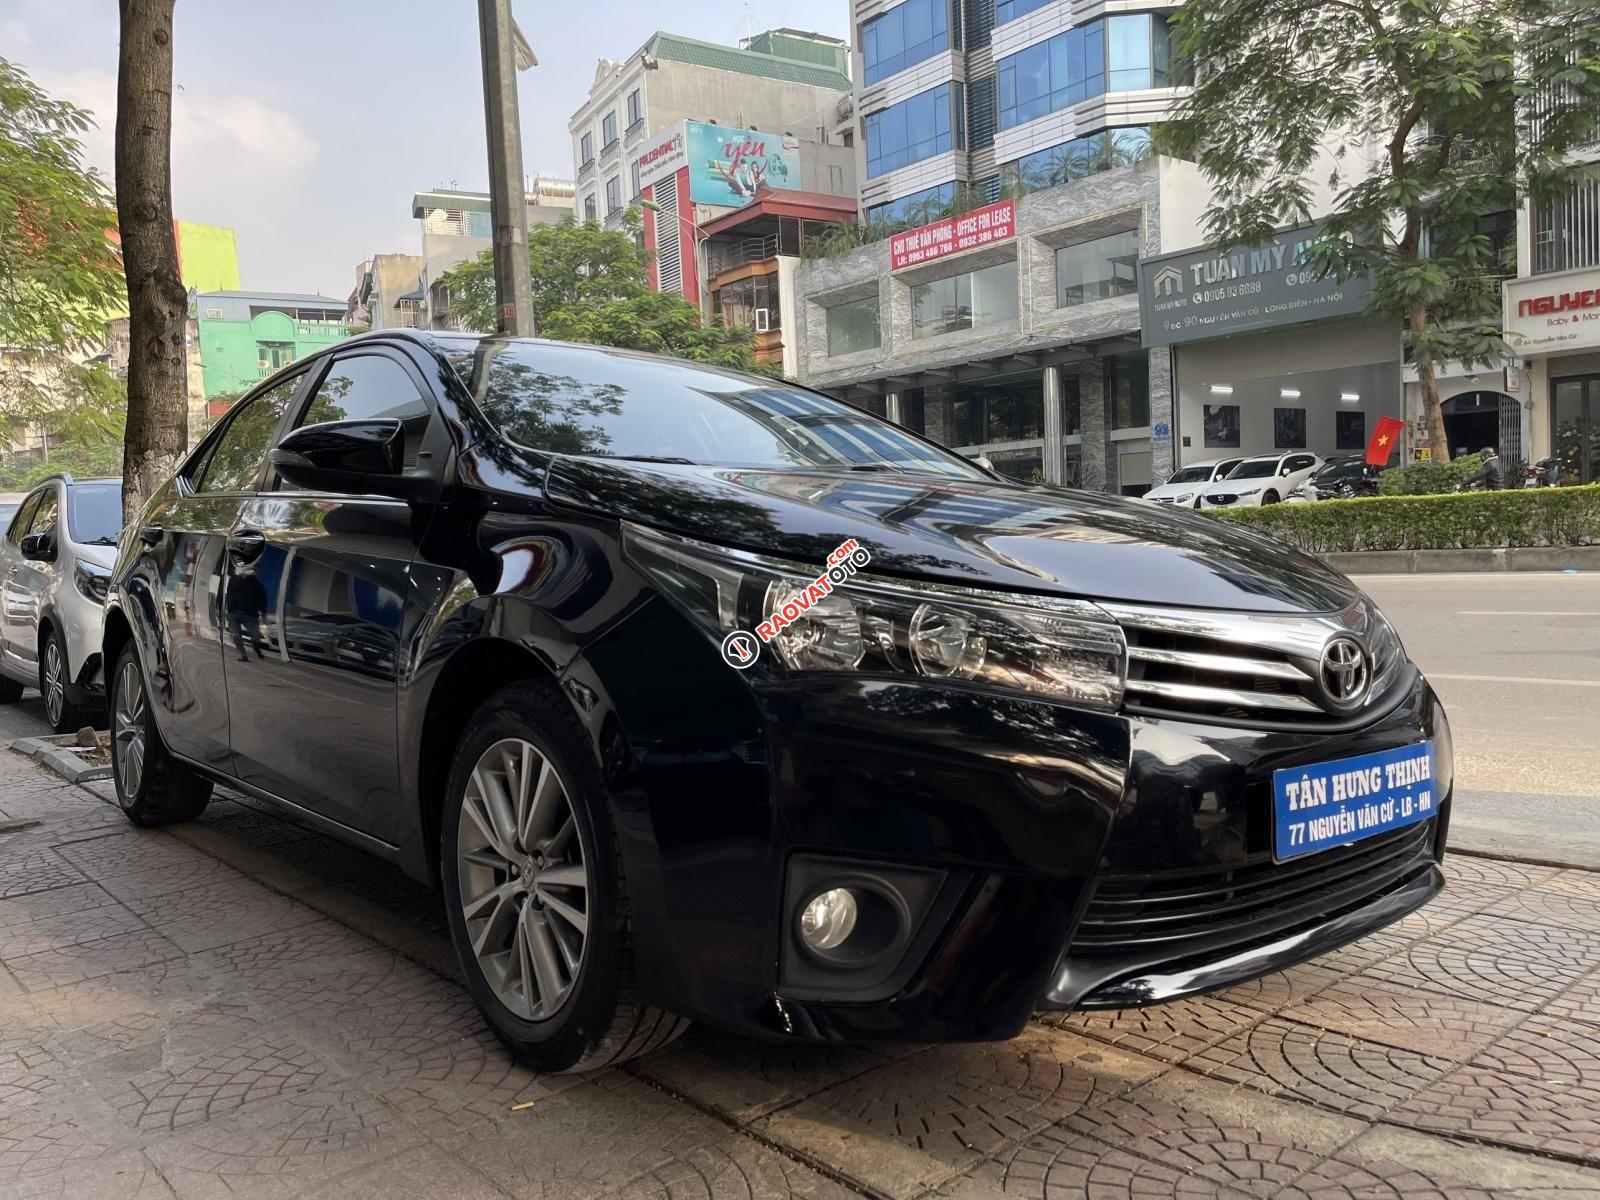 Bán gấp Toyota Corolla Altis 1.8G AT năm 2017, màu đen, còn nguyên dàn lốp, xe rất mới, giá tốt-21